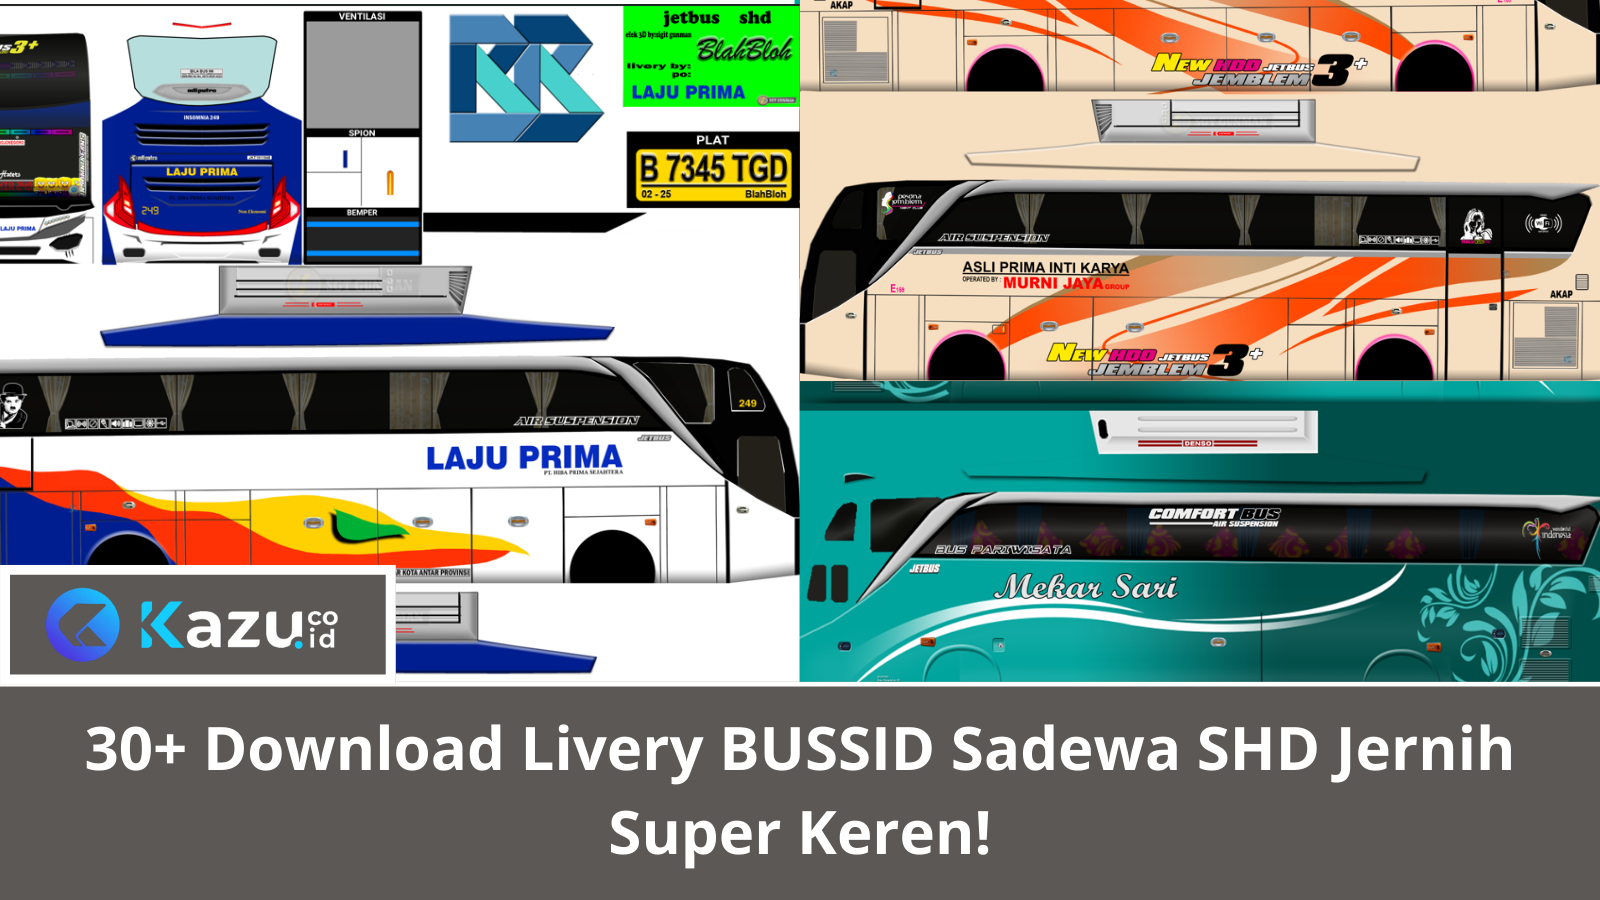 30+ Download Livery BUSSID Sadewa SHD Jernih Super Keren!